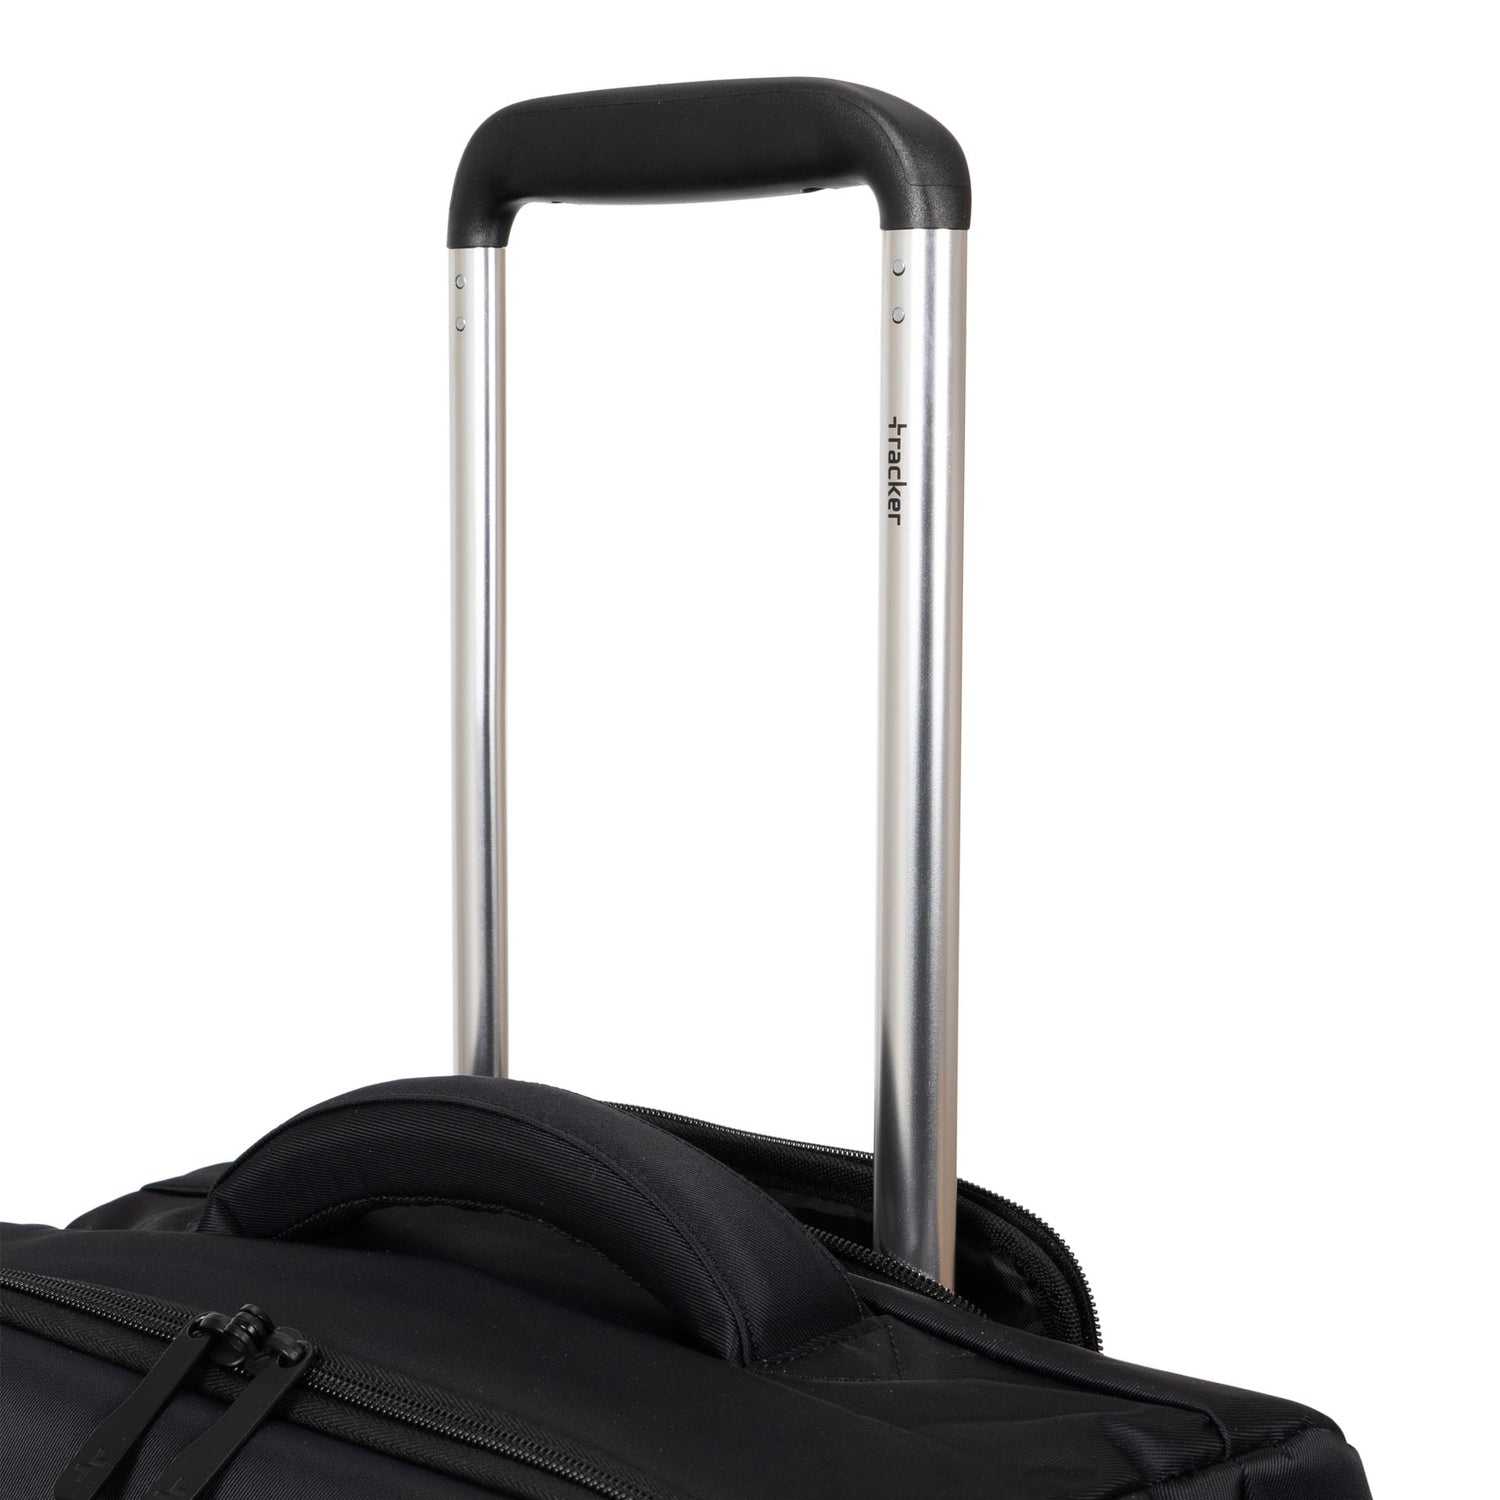 Nuage Softside 21'' Carry-On Luggage -  - 

        Tracker
      
